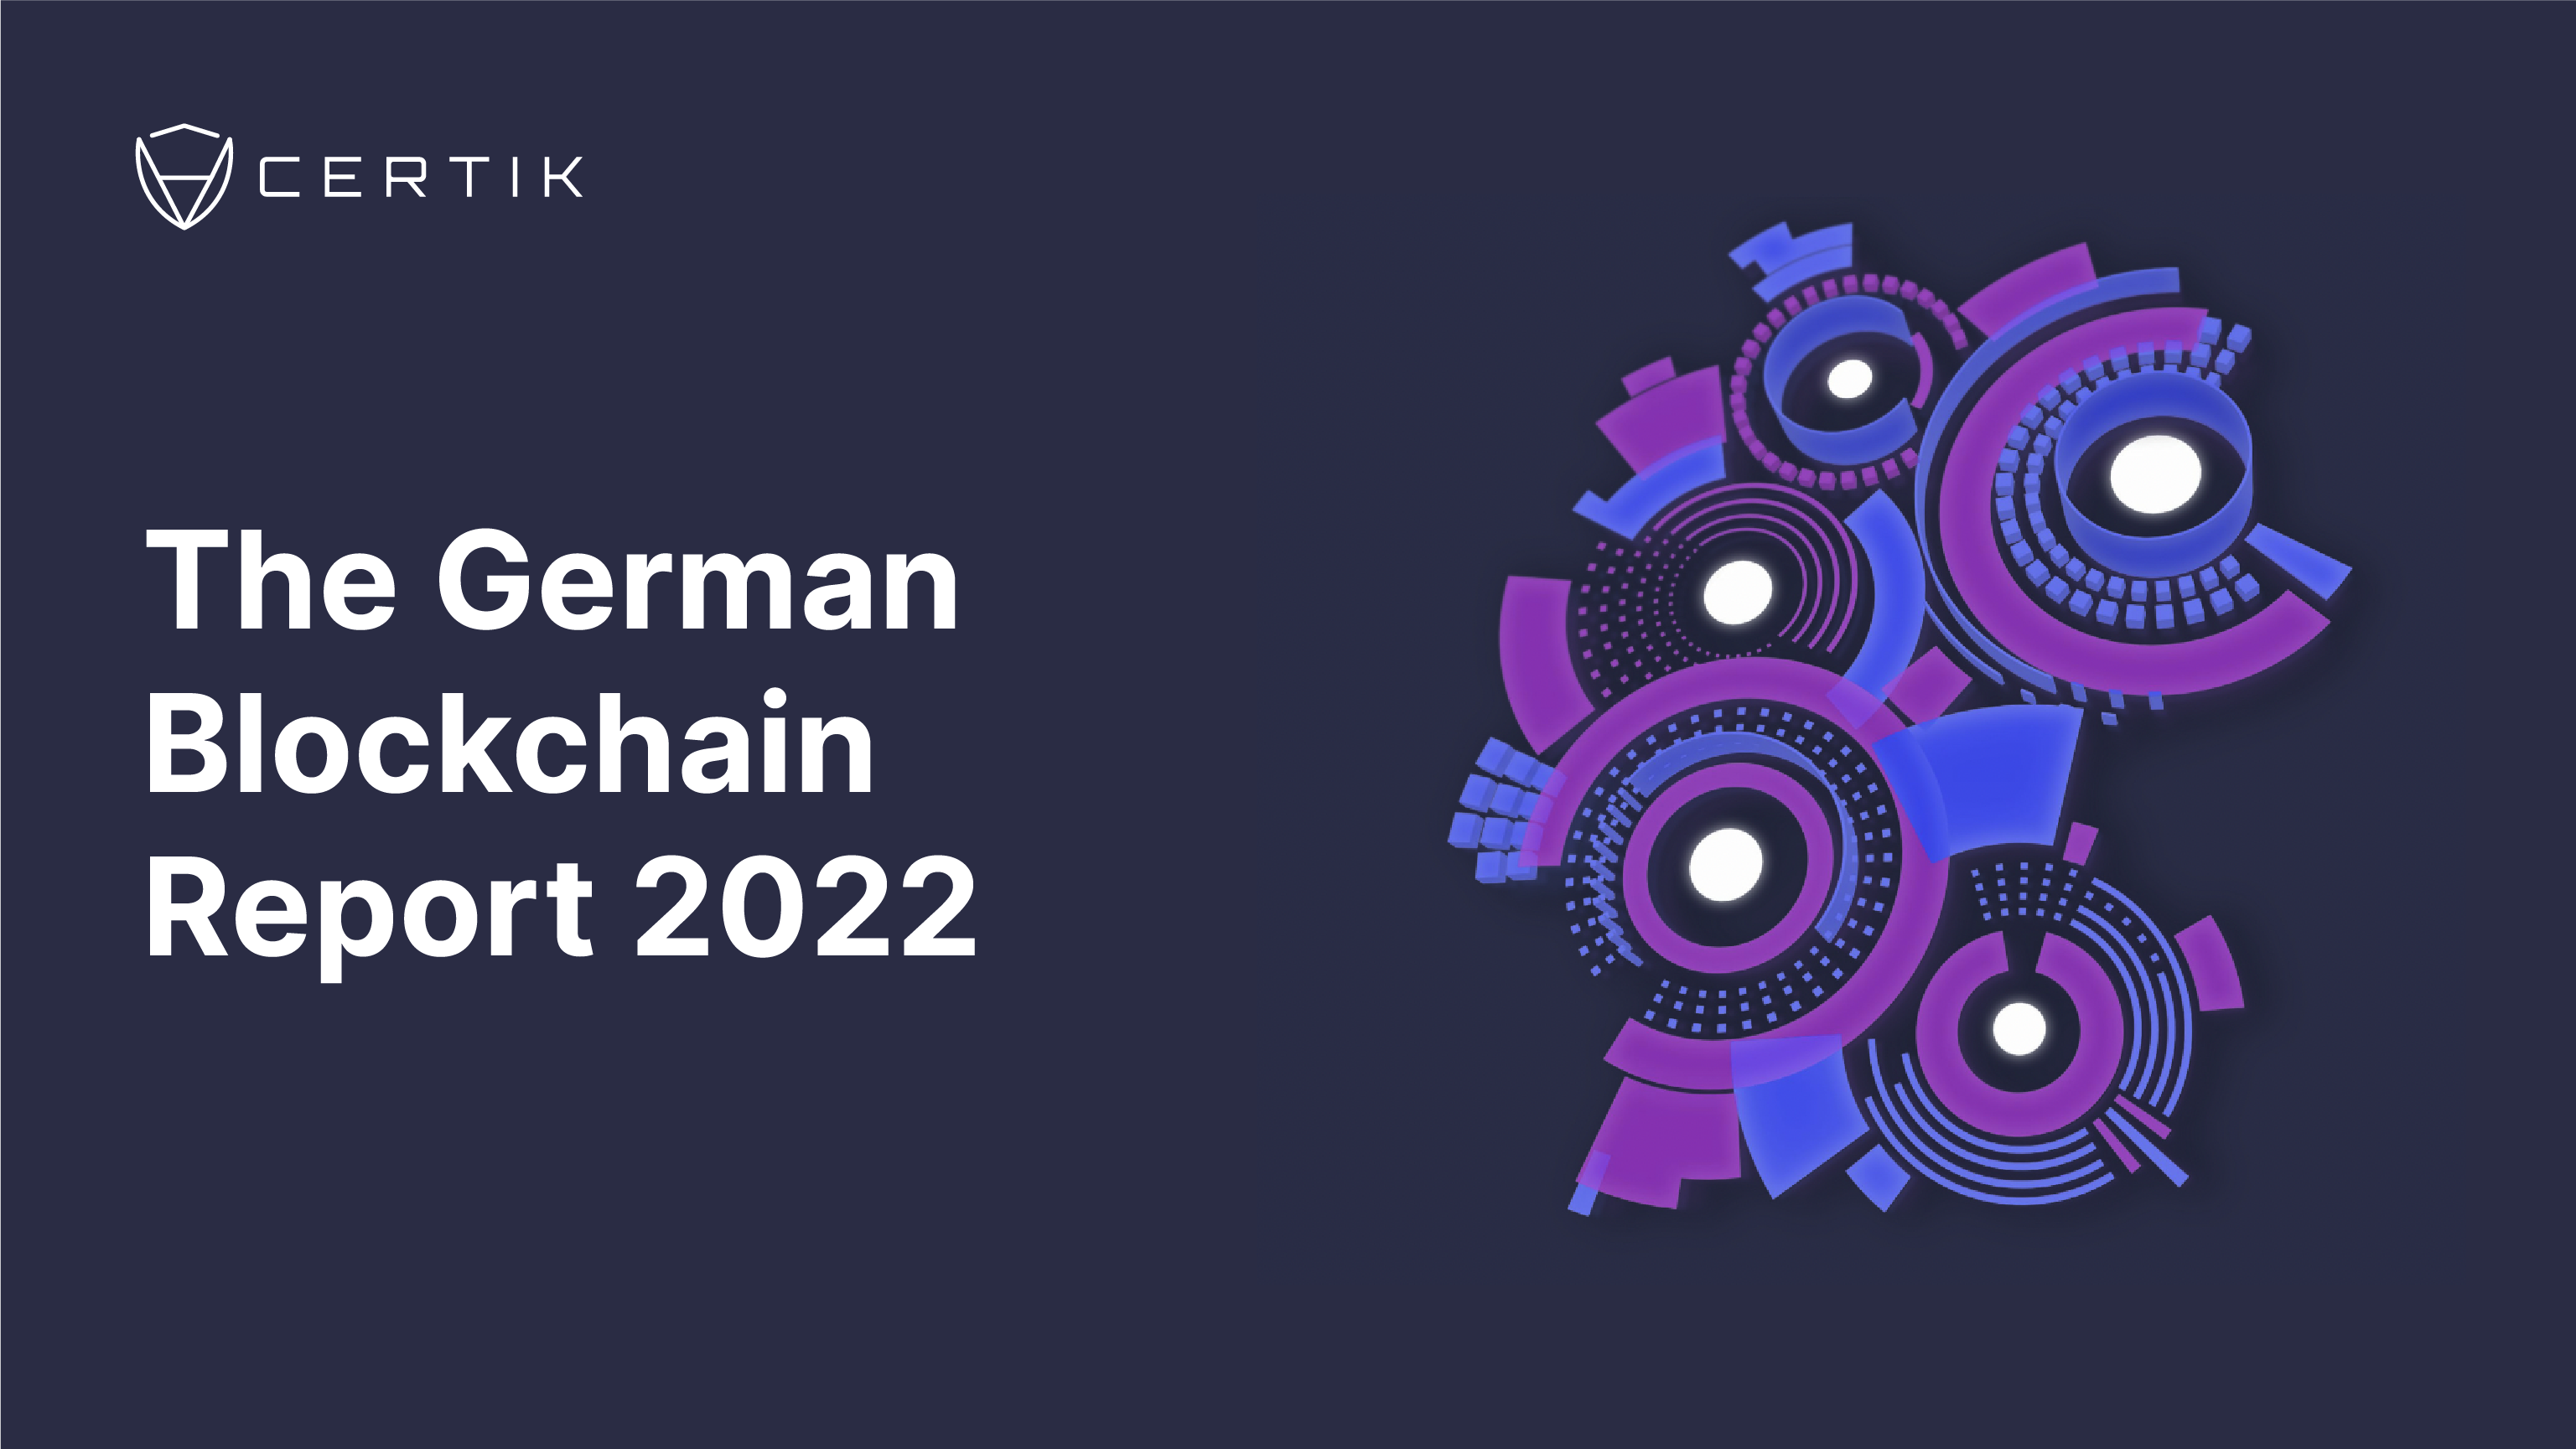 The German Blockchain Report 2022